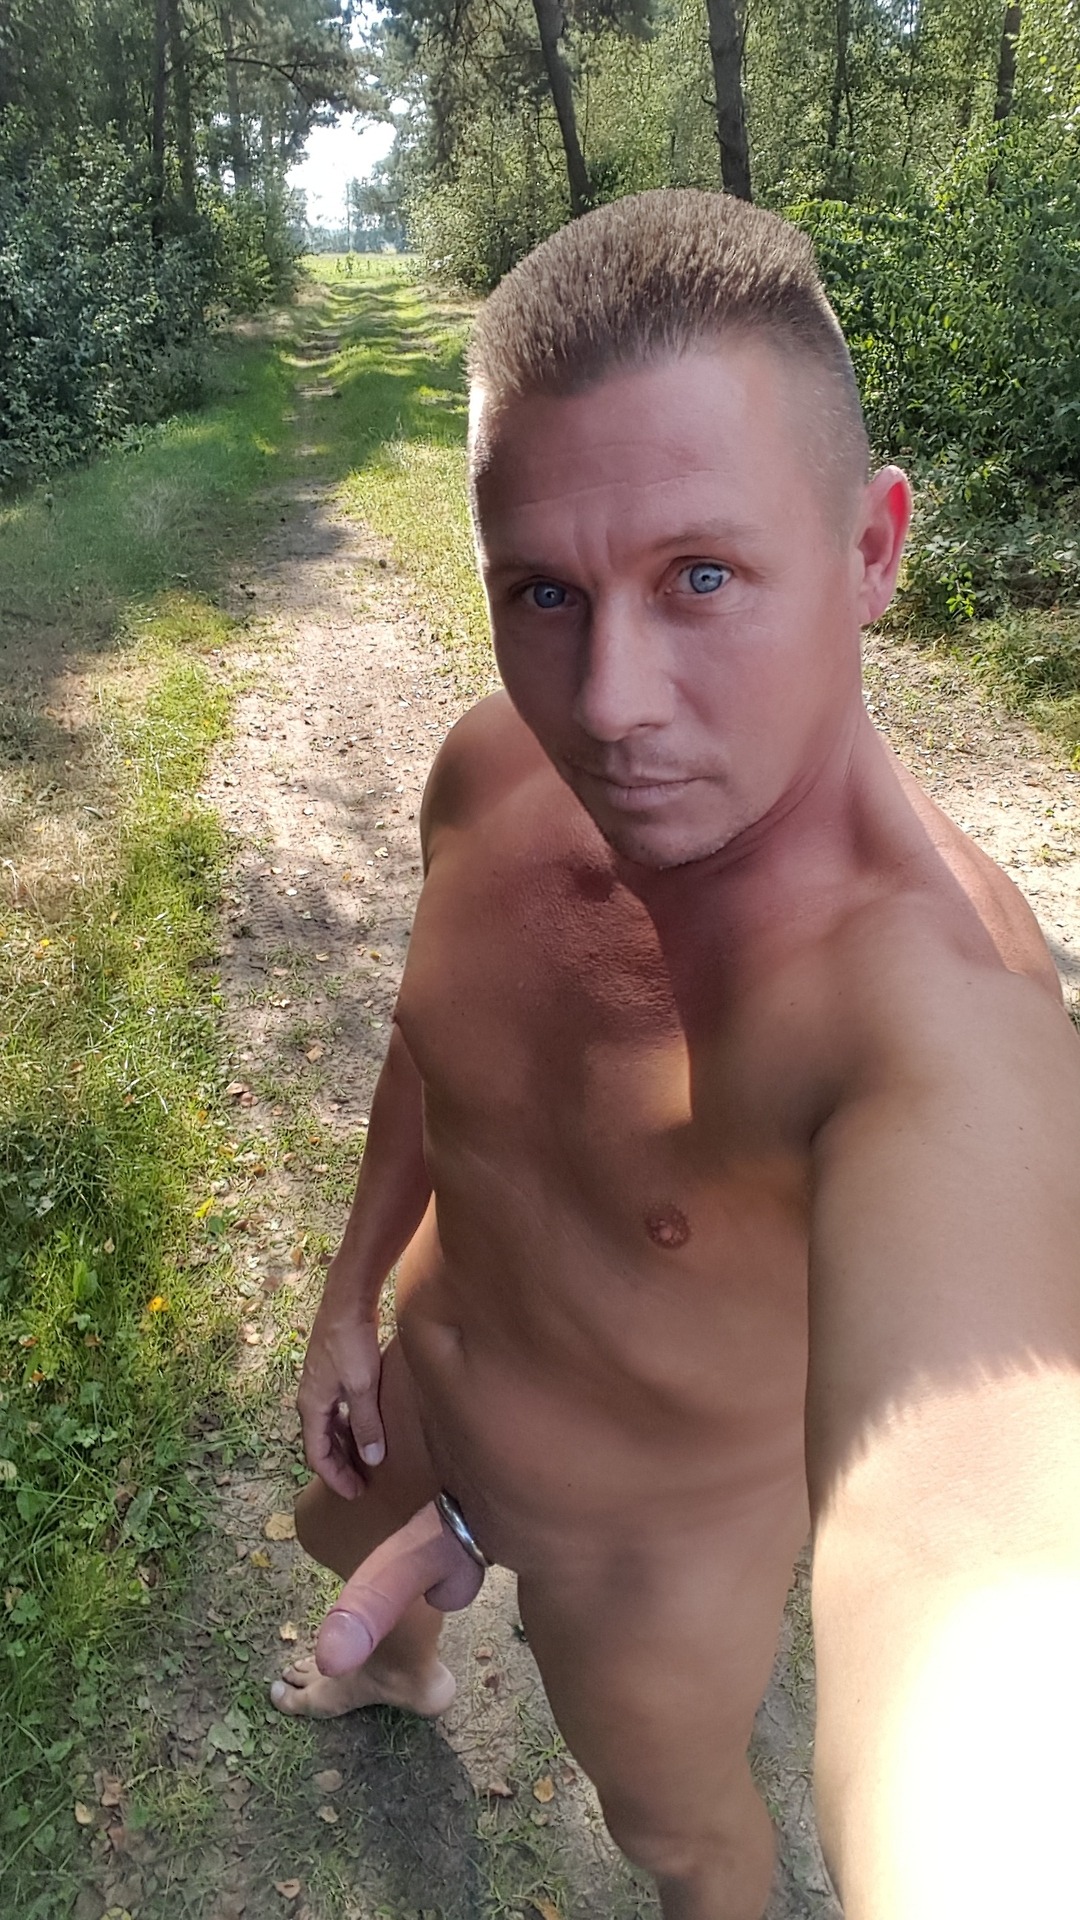 dutchnakedboy:
â€œItâ€™s me #naked#outdoor
â€